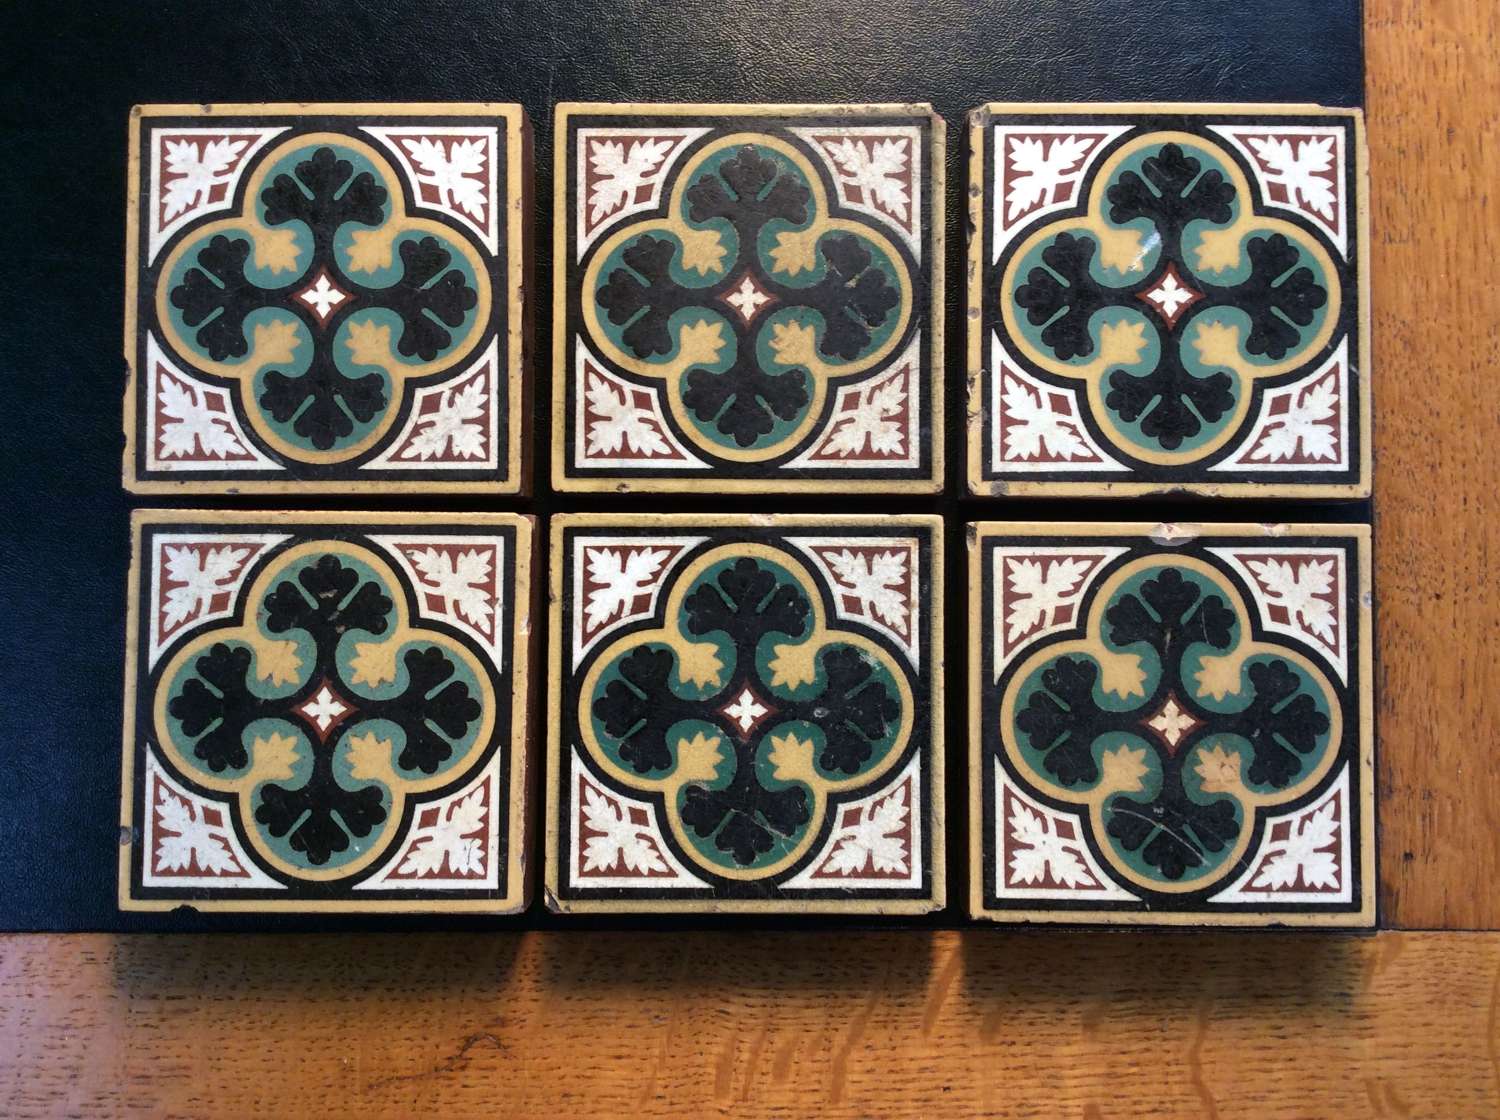 Victorian English geometric motif encaustic floor tiles c.1852-1900.